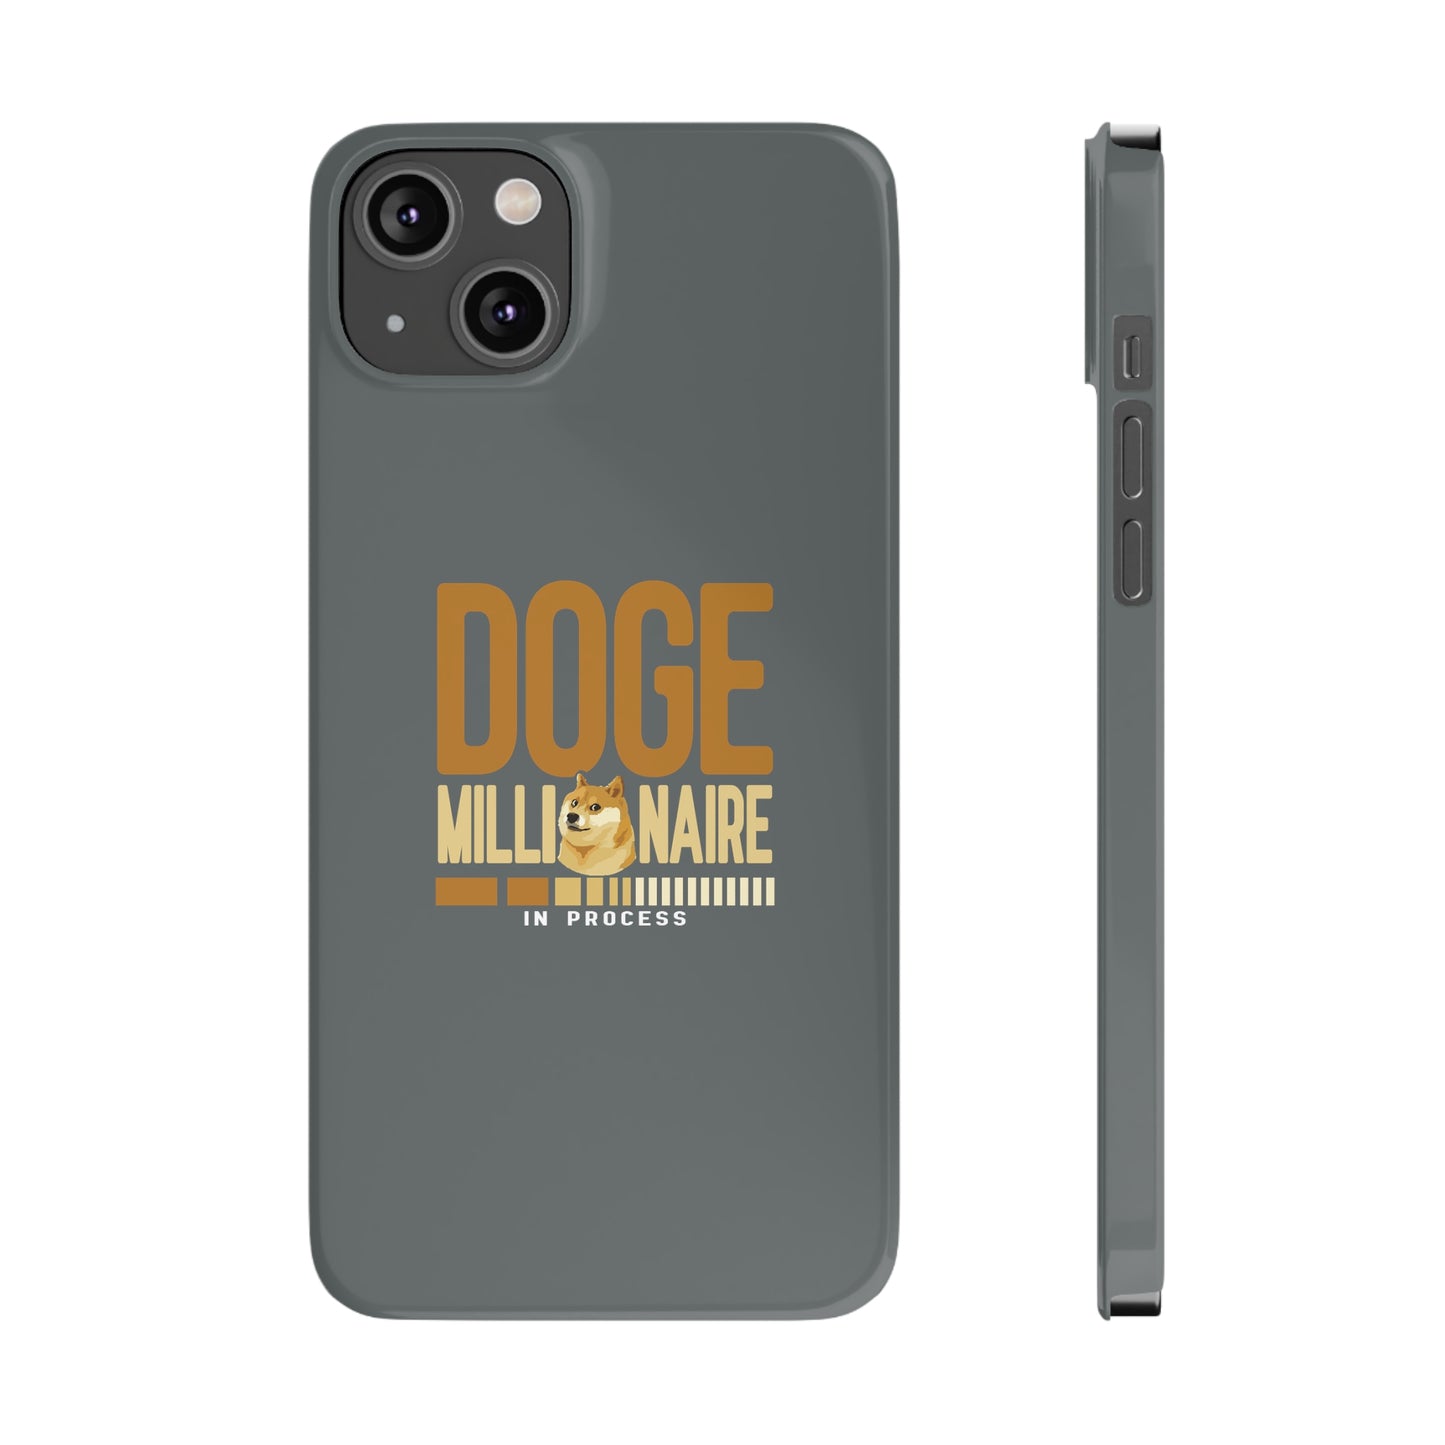 Slim Dogecoin Millionaire Phone Cases